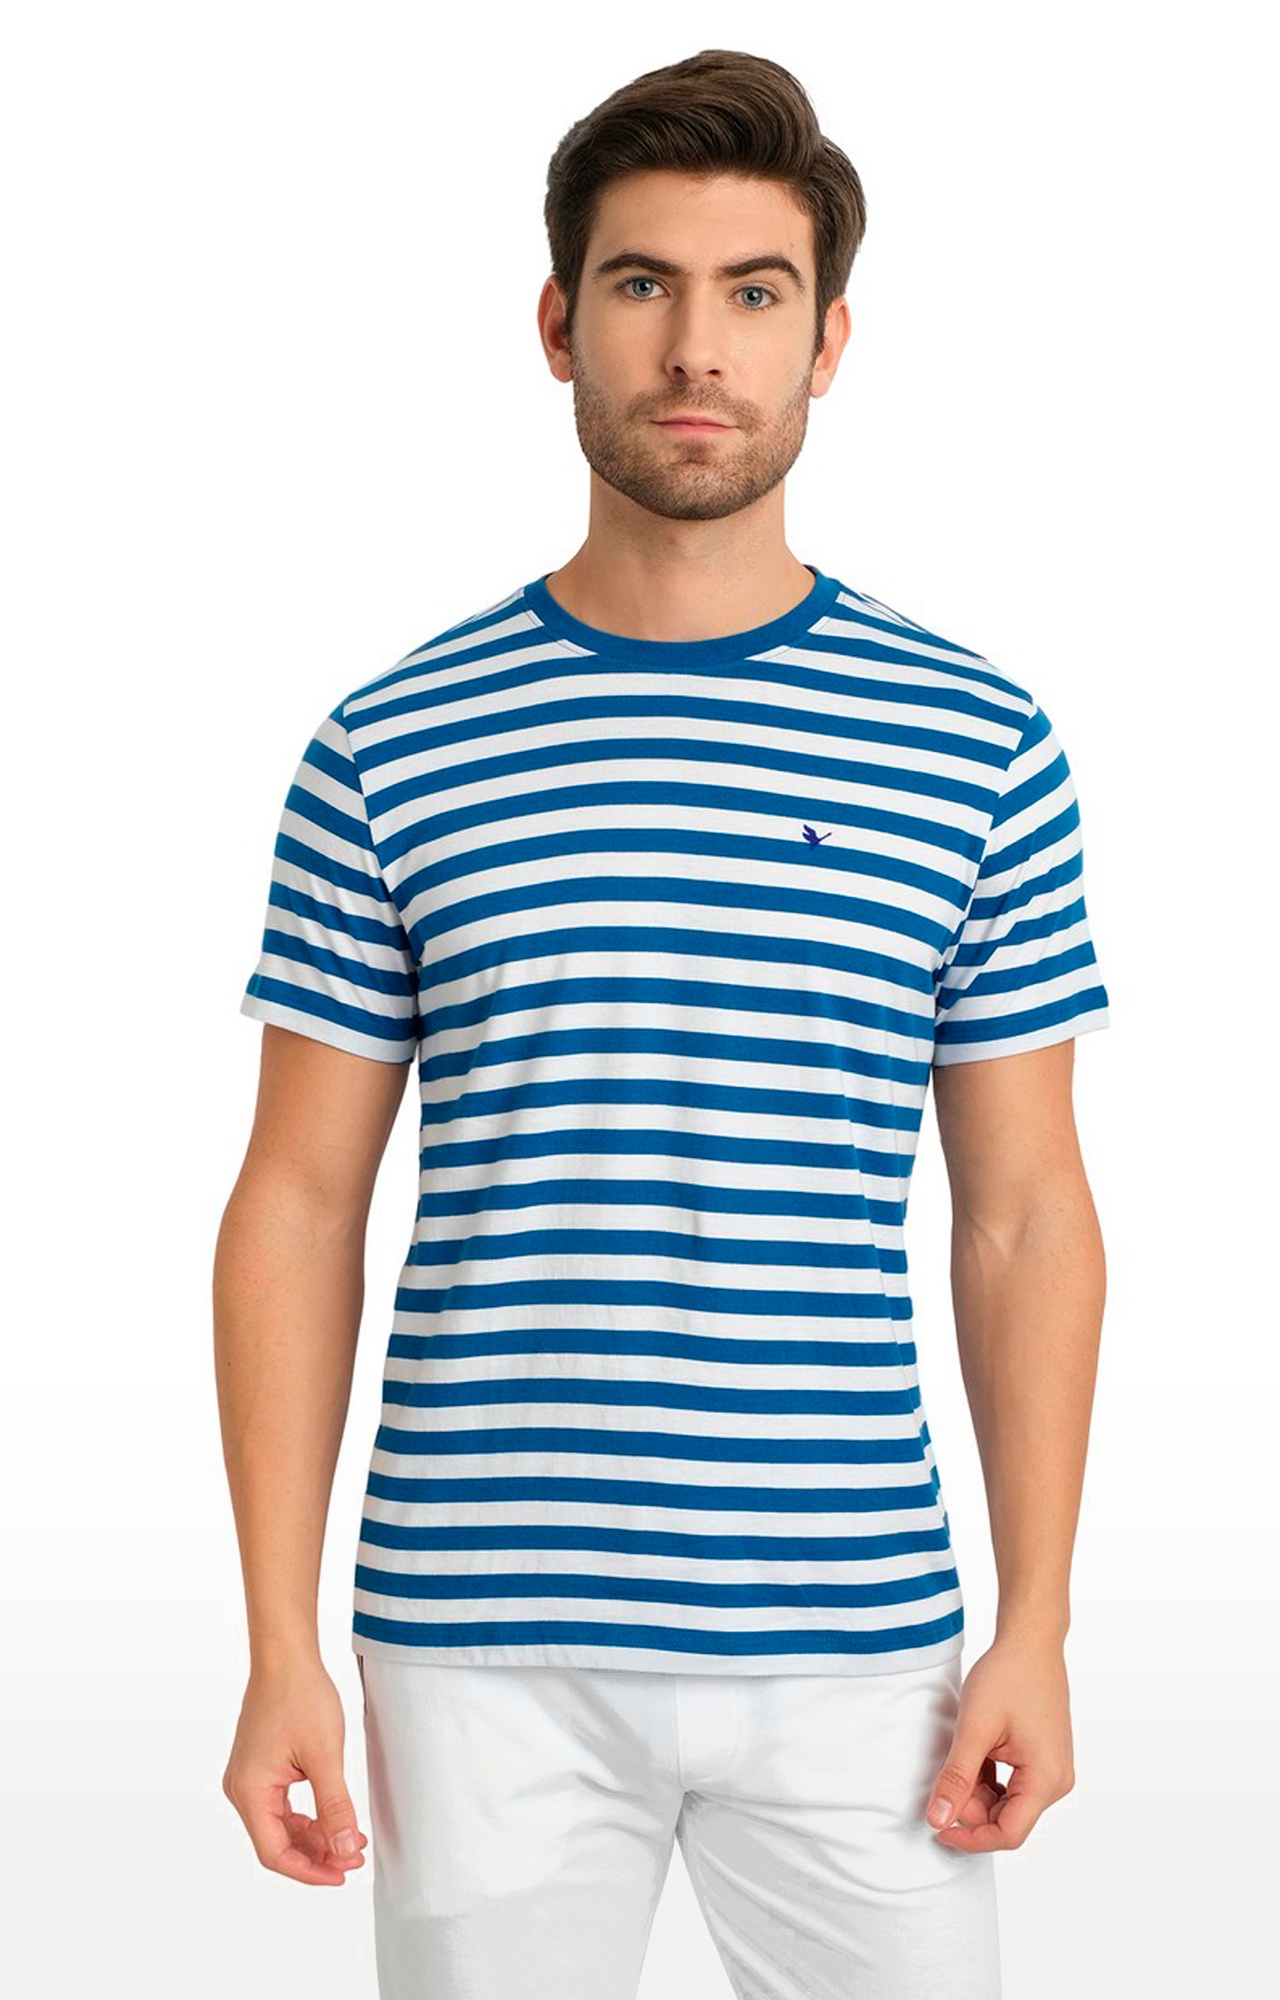 Men's Blue and White Cotton Striped Regular T-Shirt